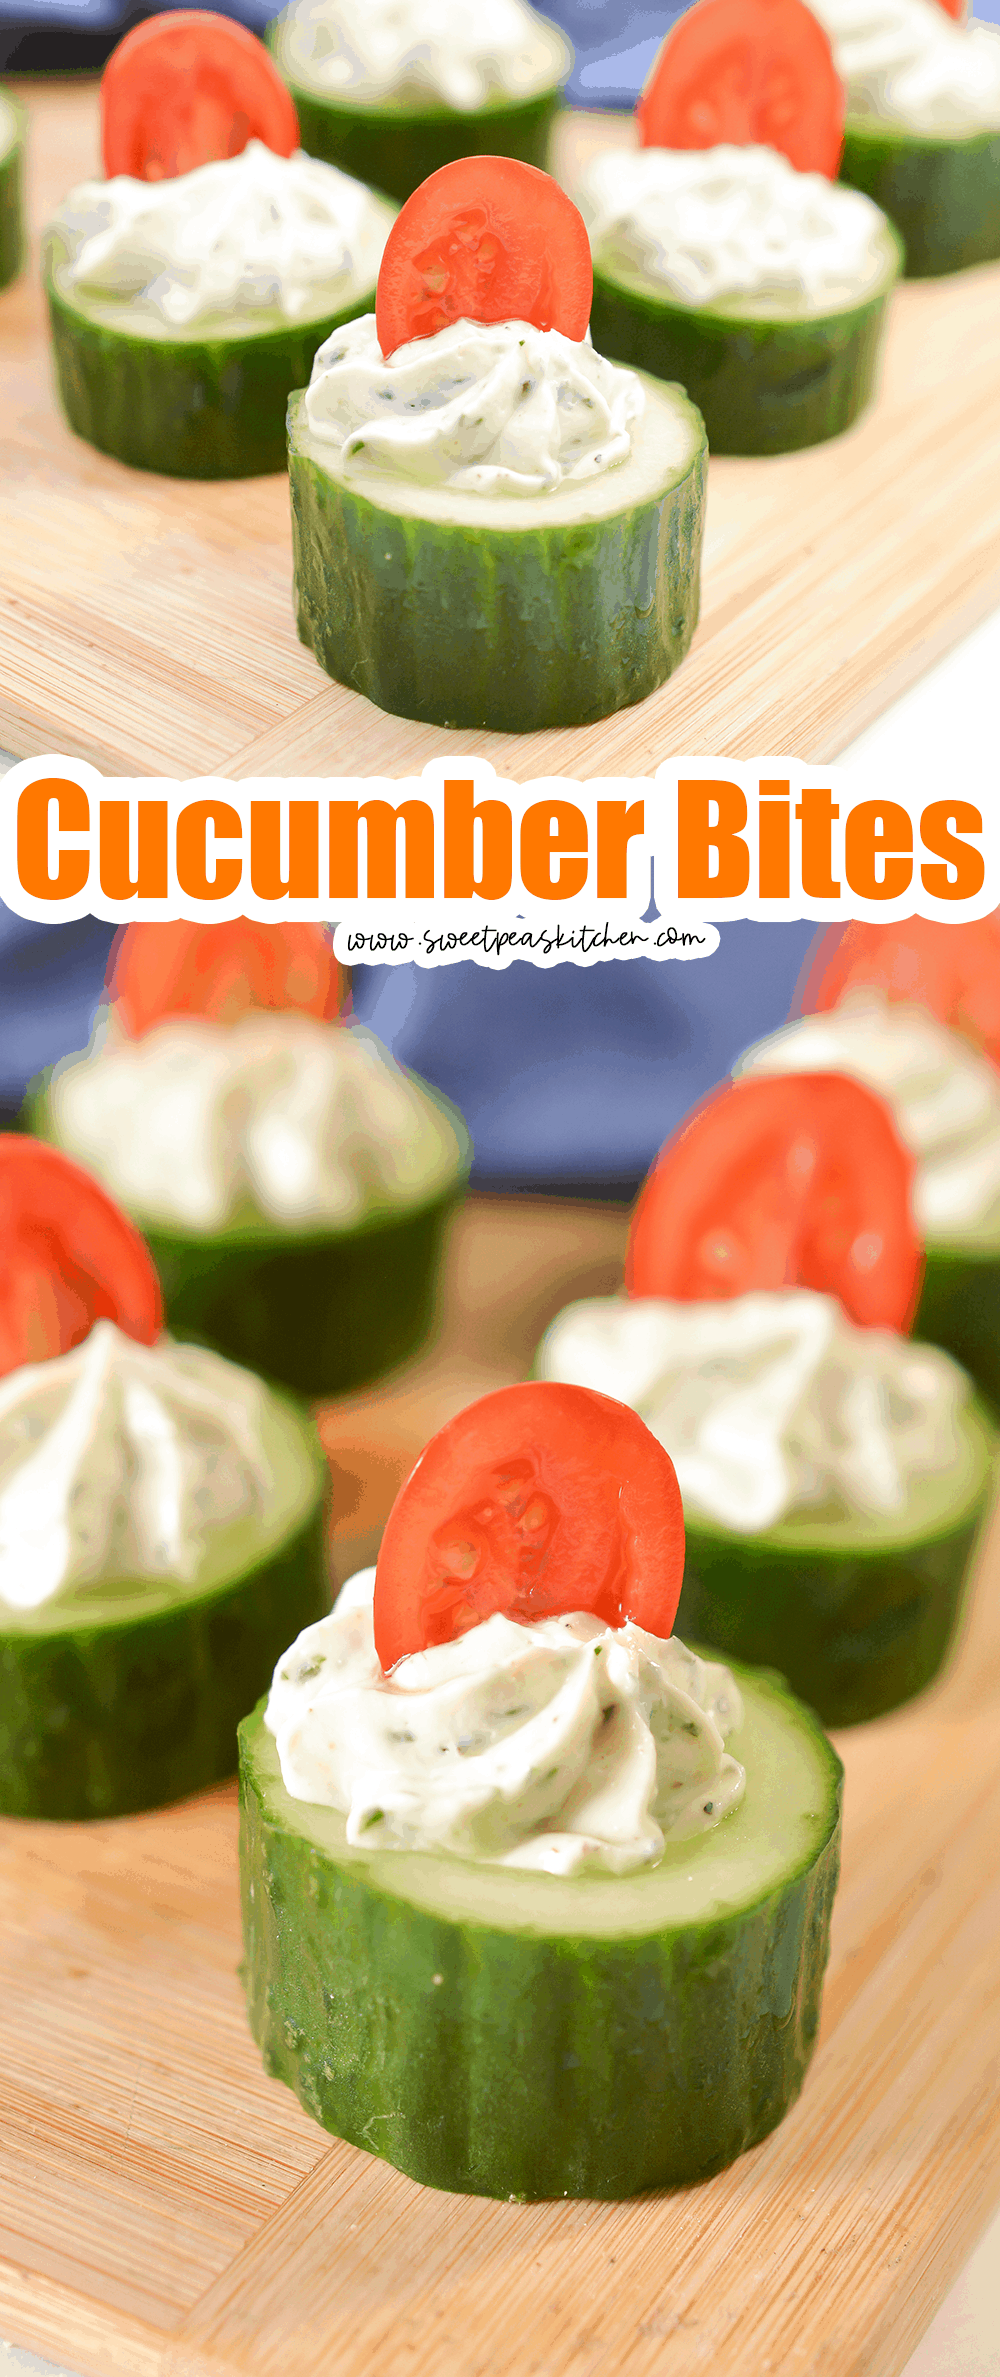 Cucumber Bites on pinterest